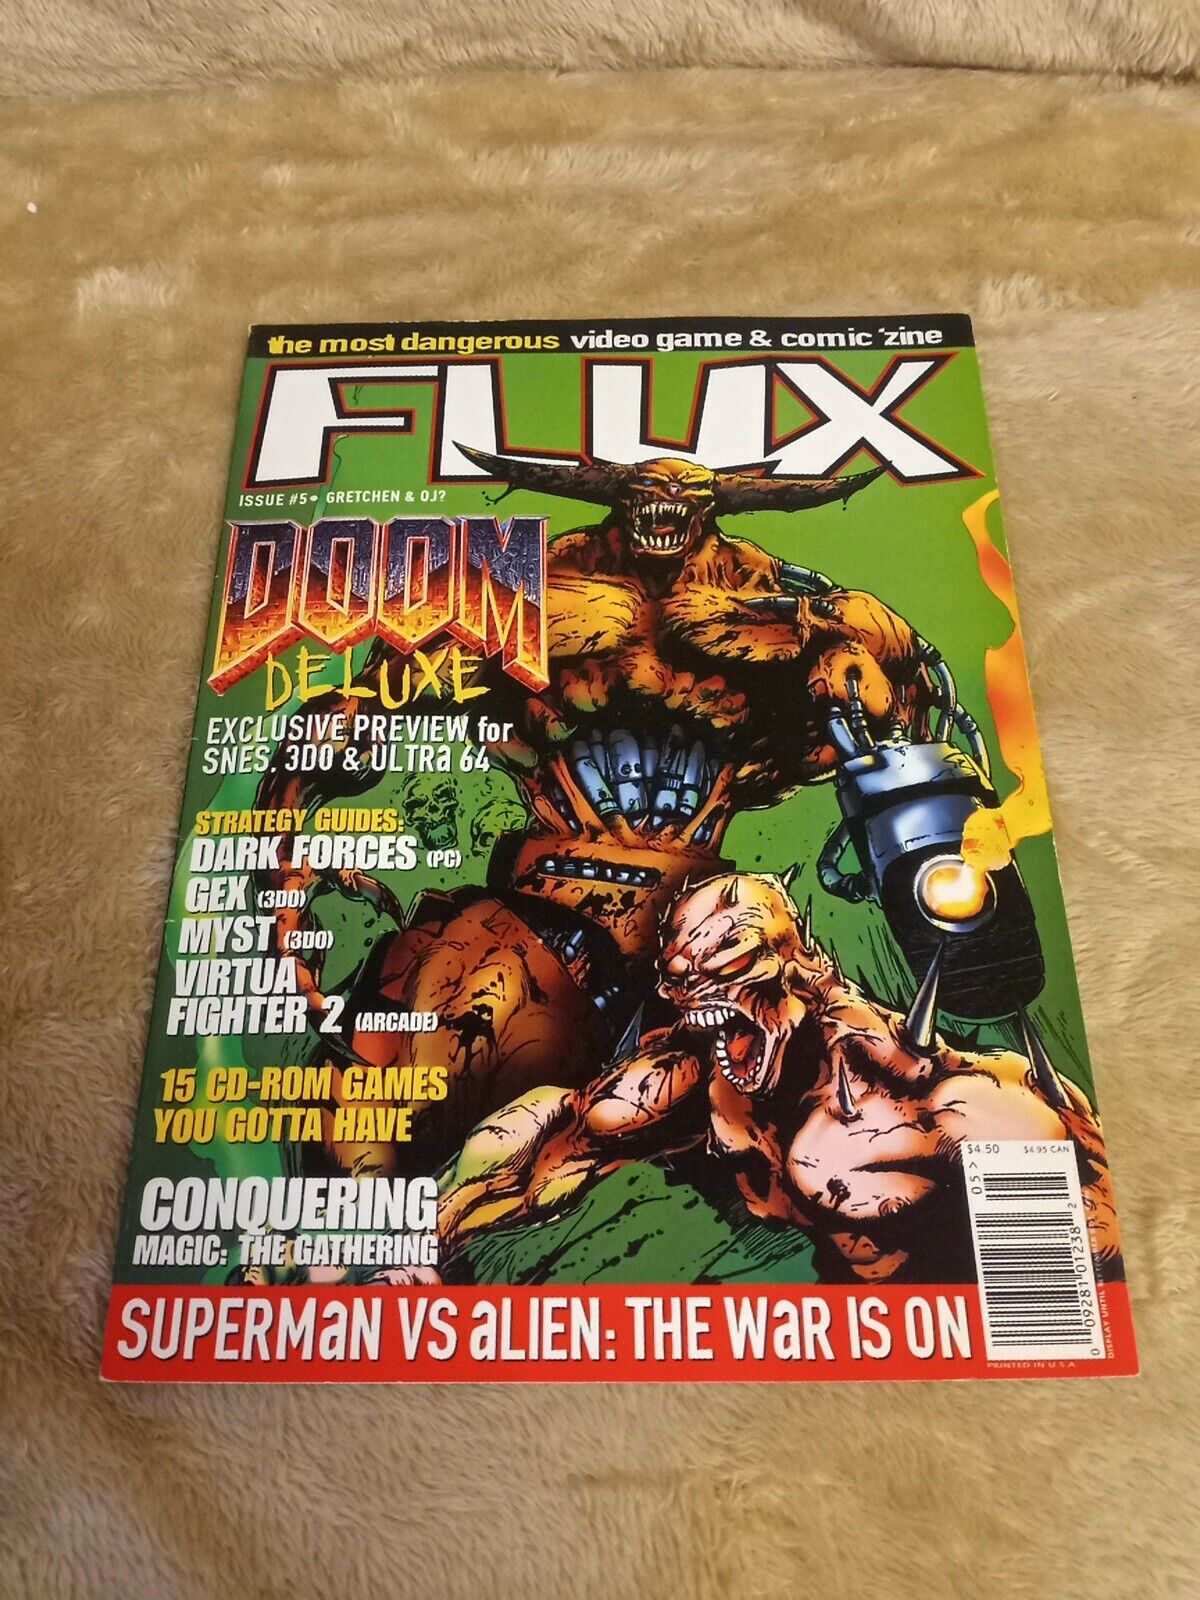 FLUX Video Game/ Comics Magazine Issue #5 Sept. 1995 Doom Deluxe 